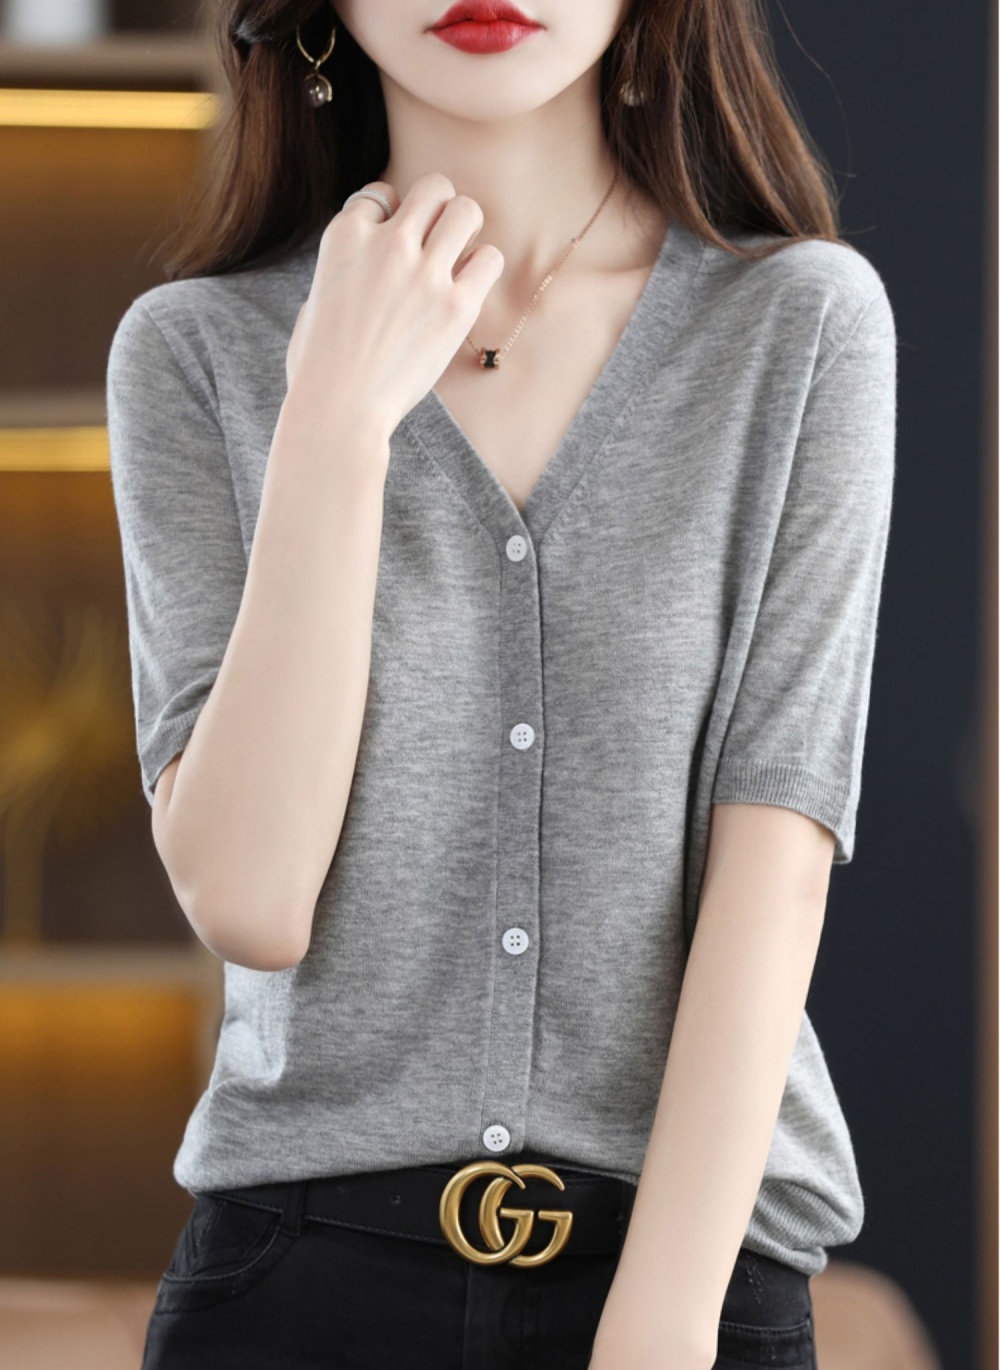 Short sleeve V-neck tops flax knitted coat for women